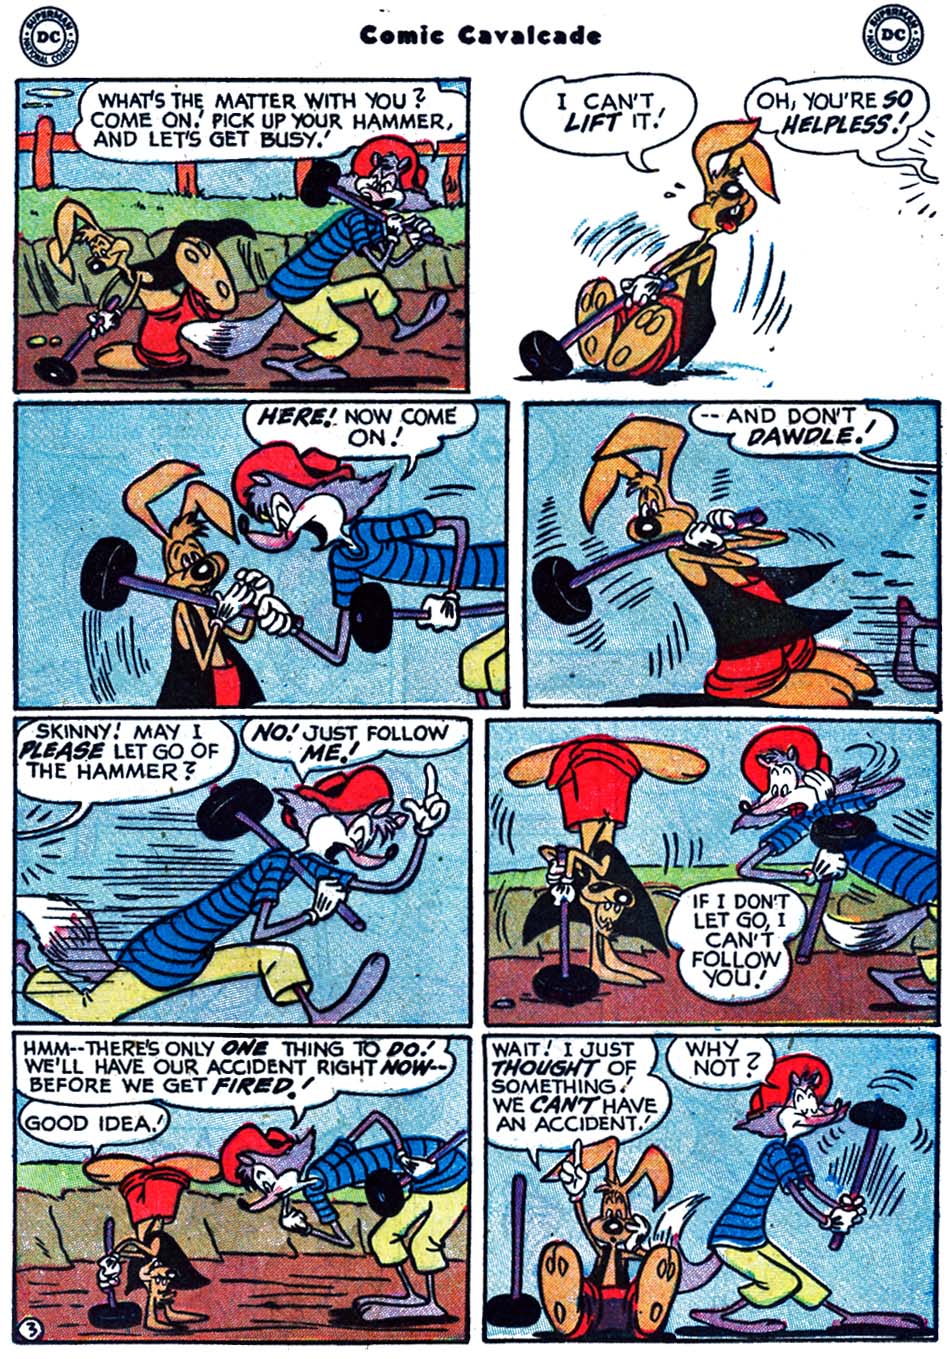 Comic Cavalcade issue 51 - Page 25